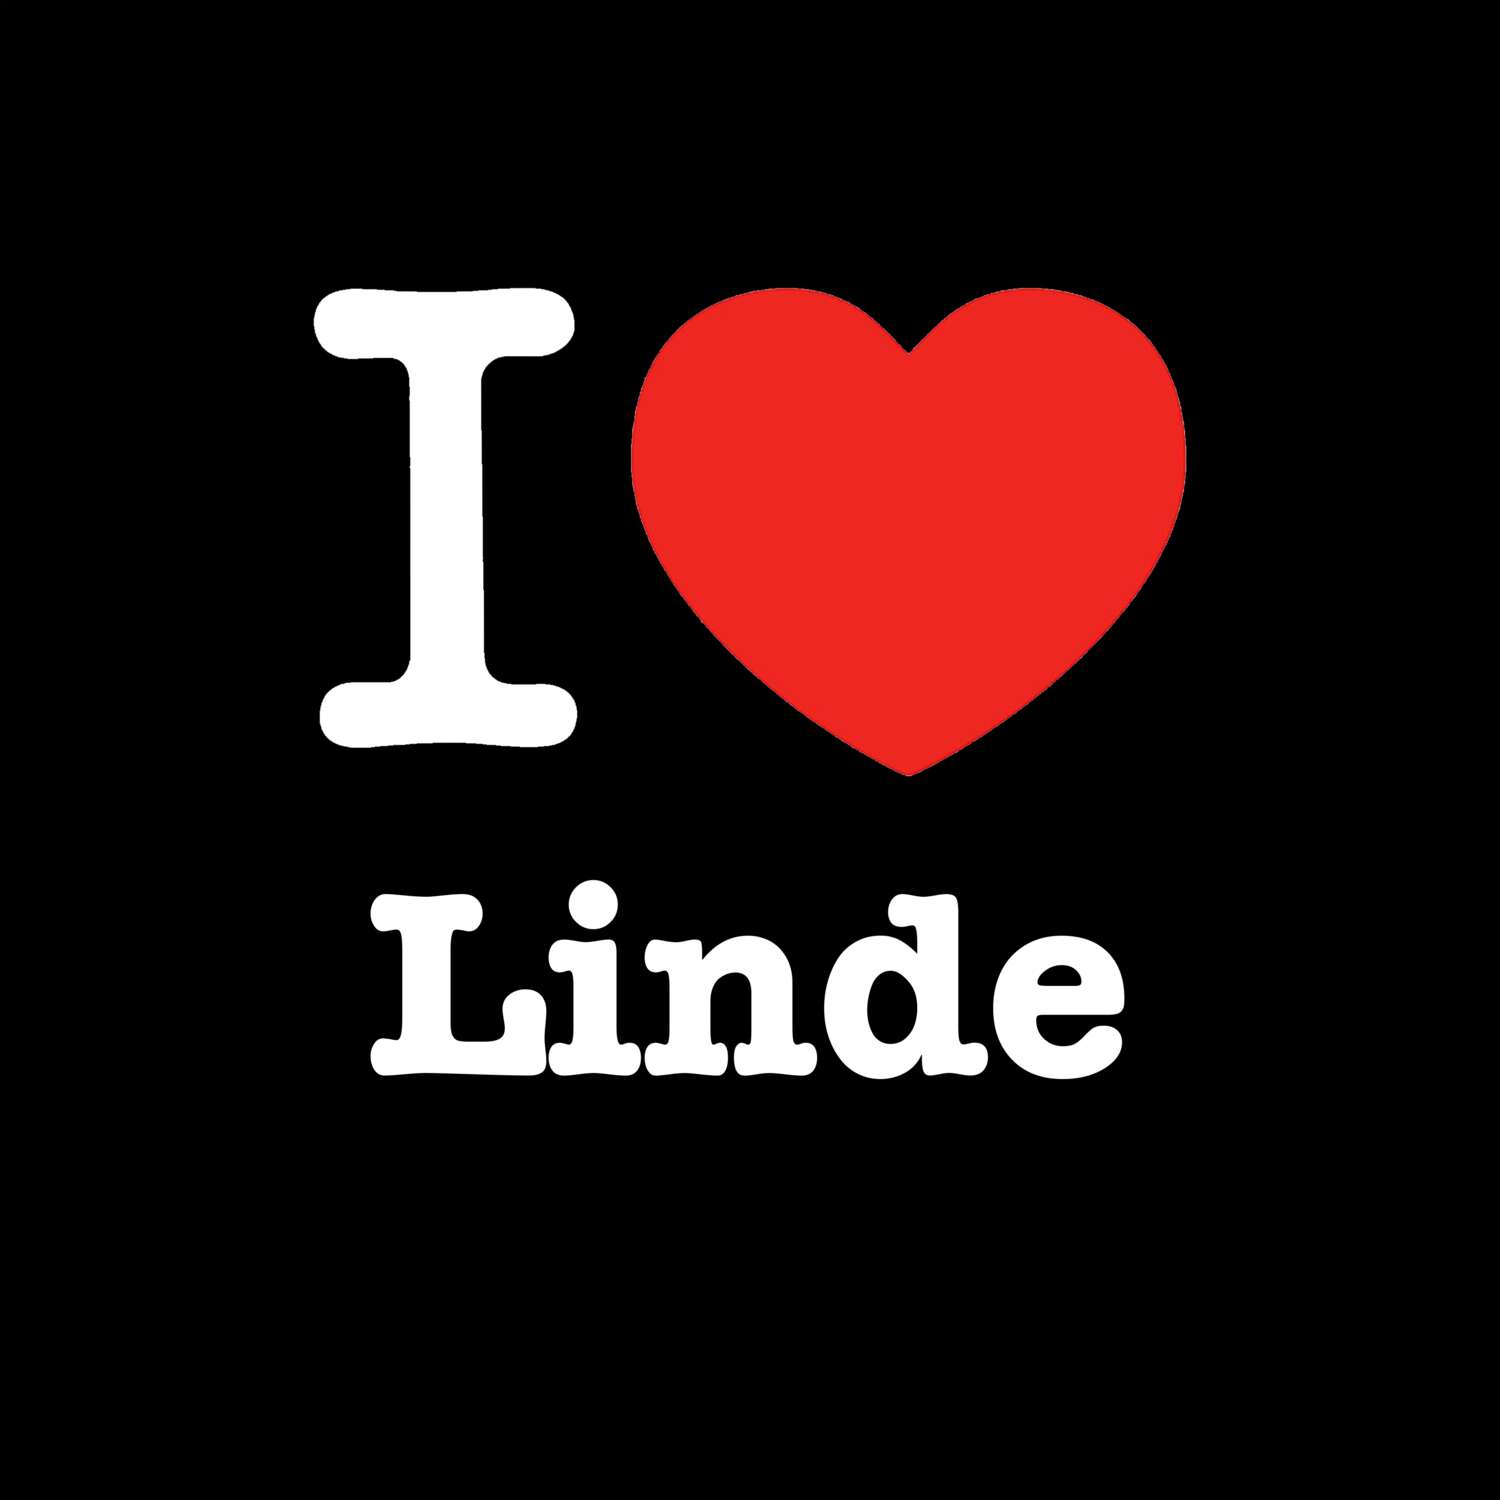 Linde T-Shirt »I love«